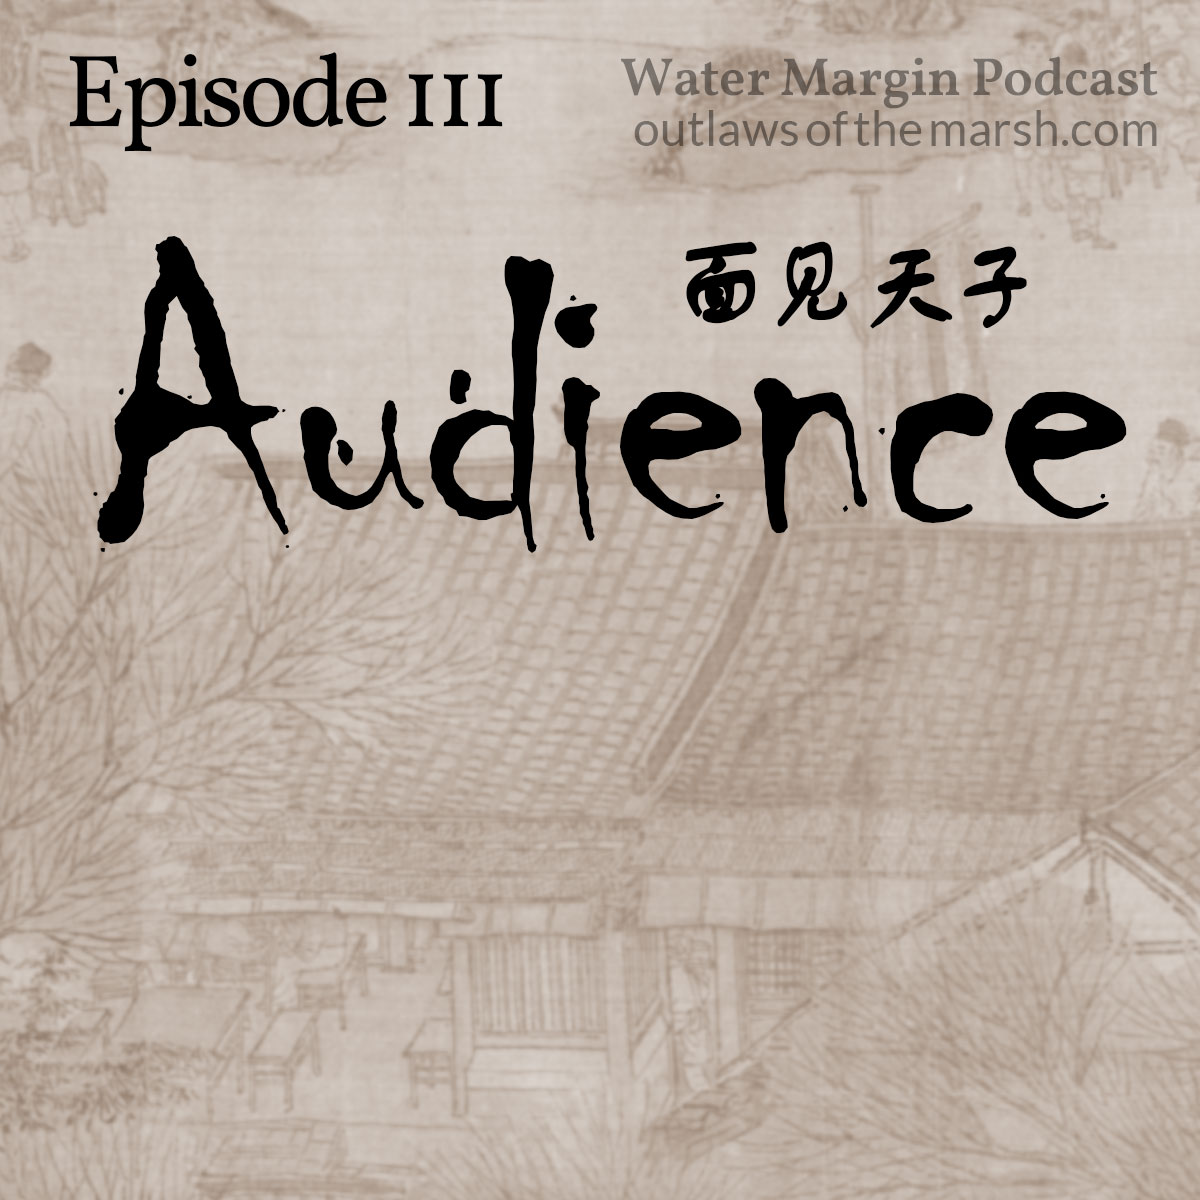 Water Margin Podcast: Episode 111